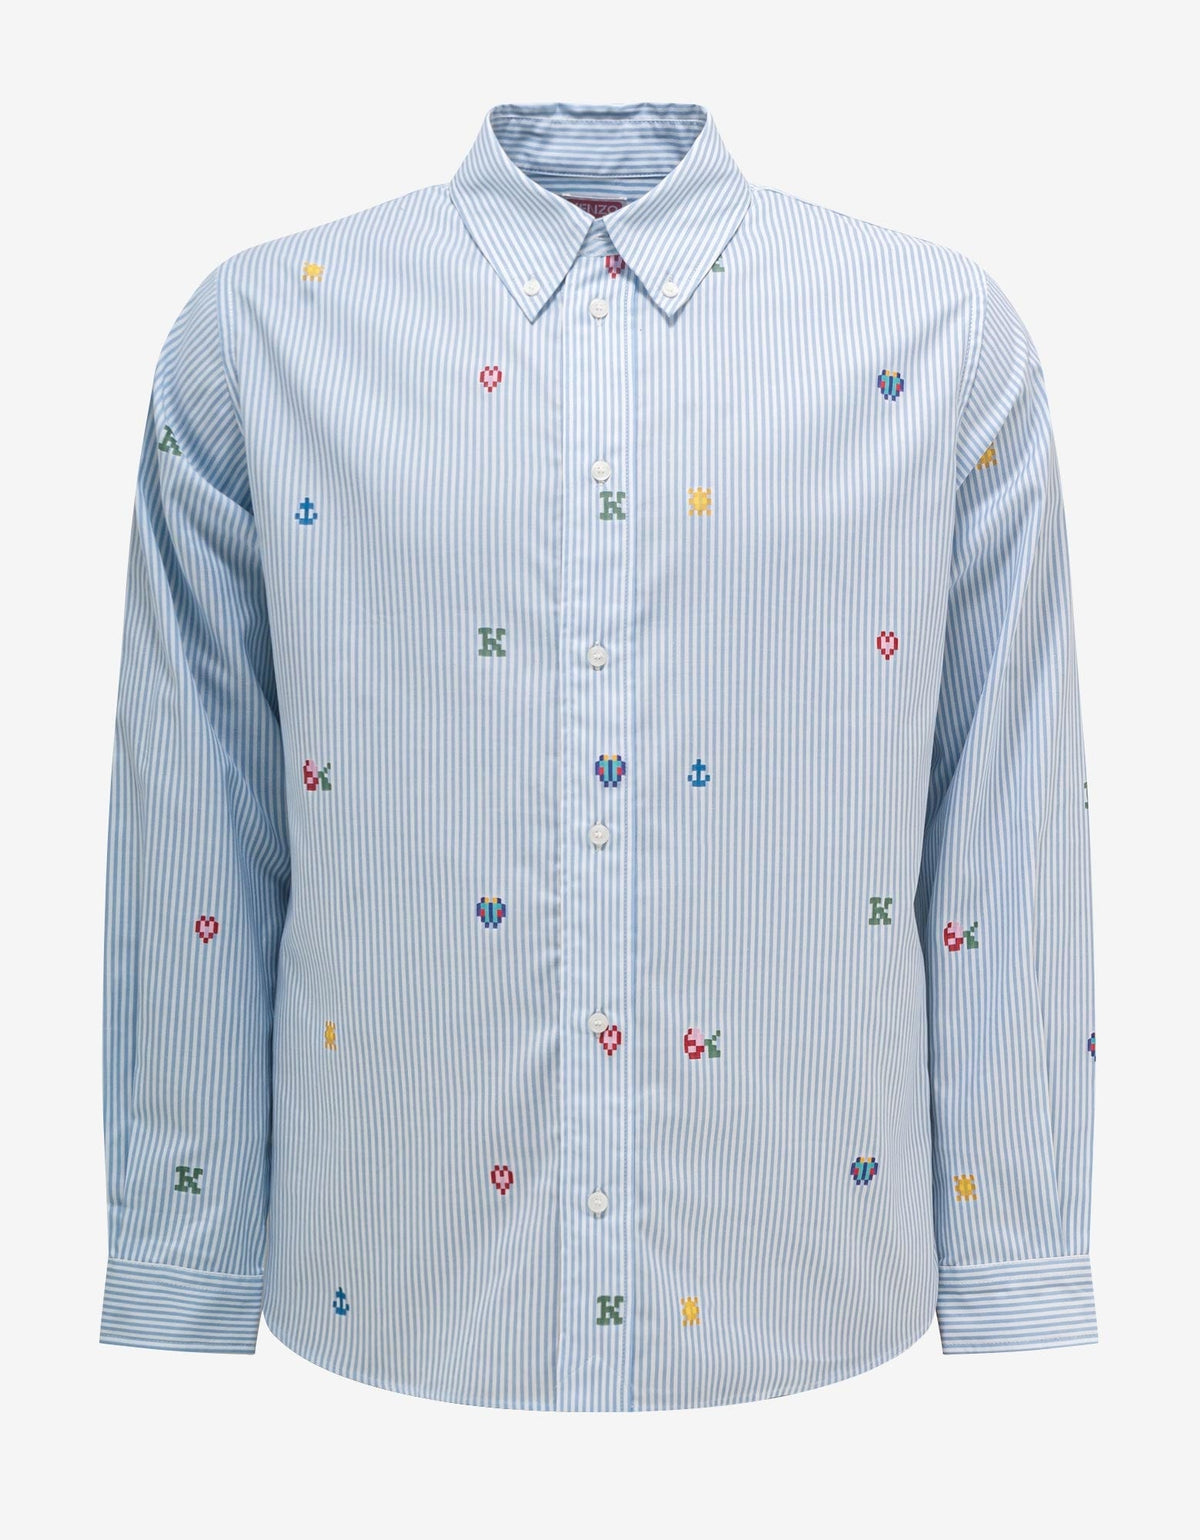 Kenzo Blue 'Kenzo Pixel' Striped Shirt